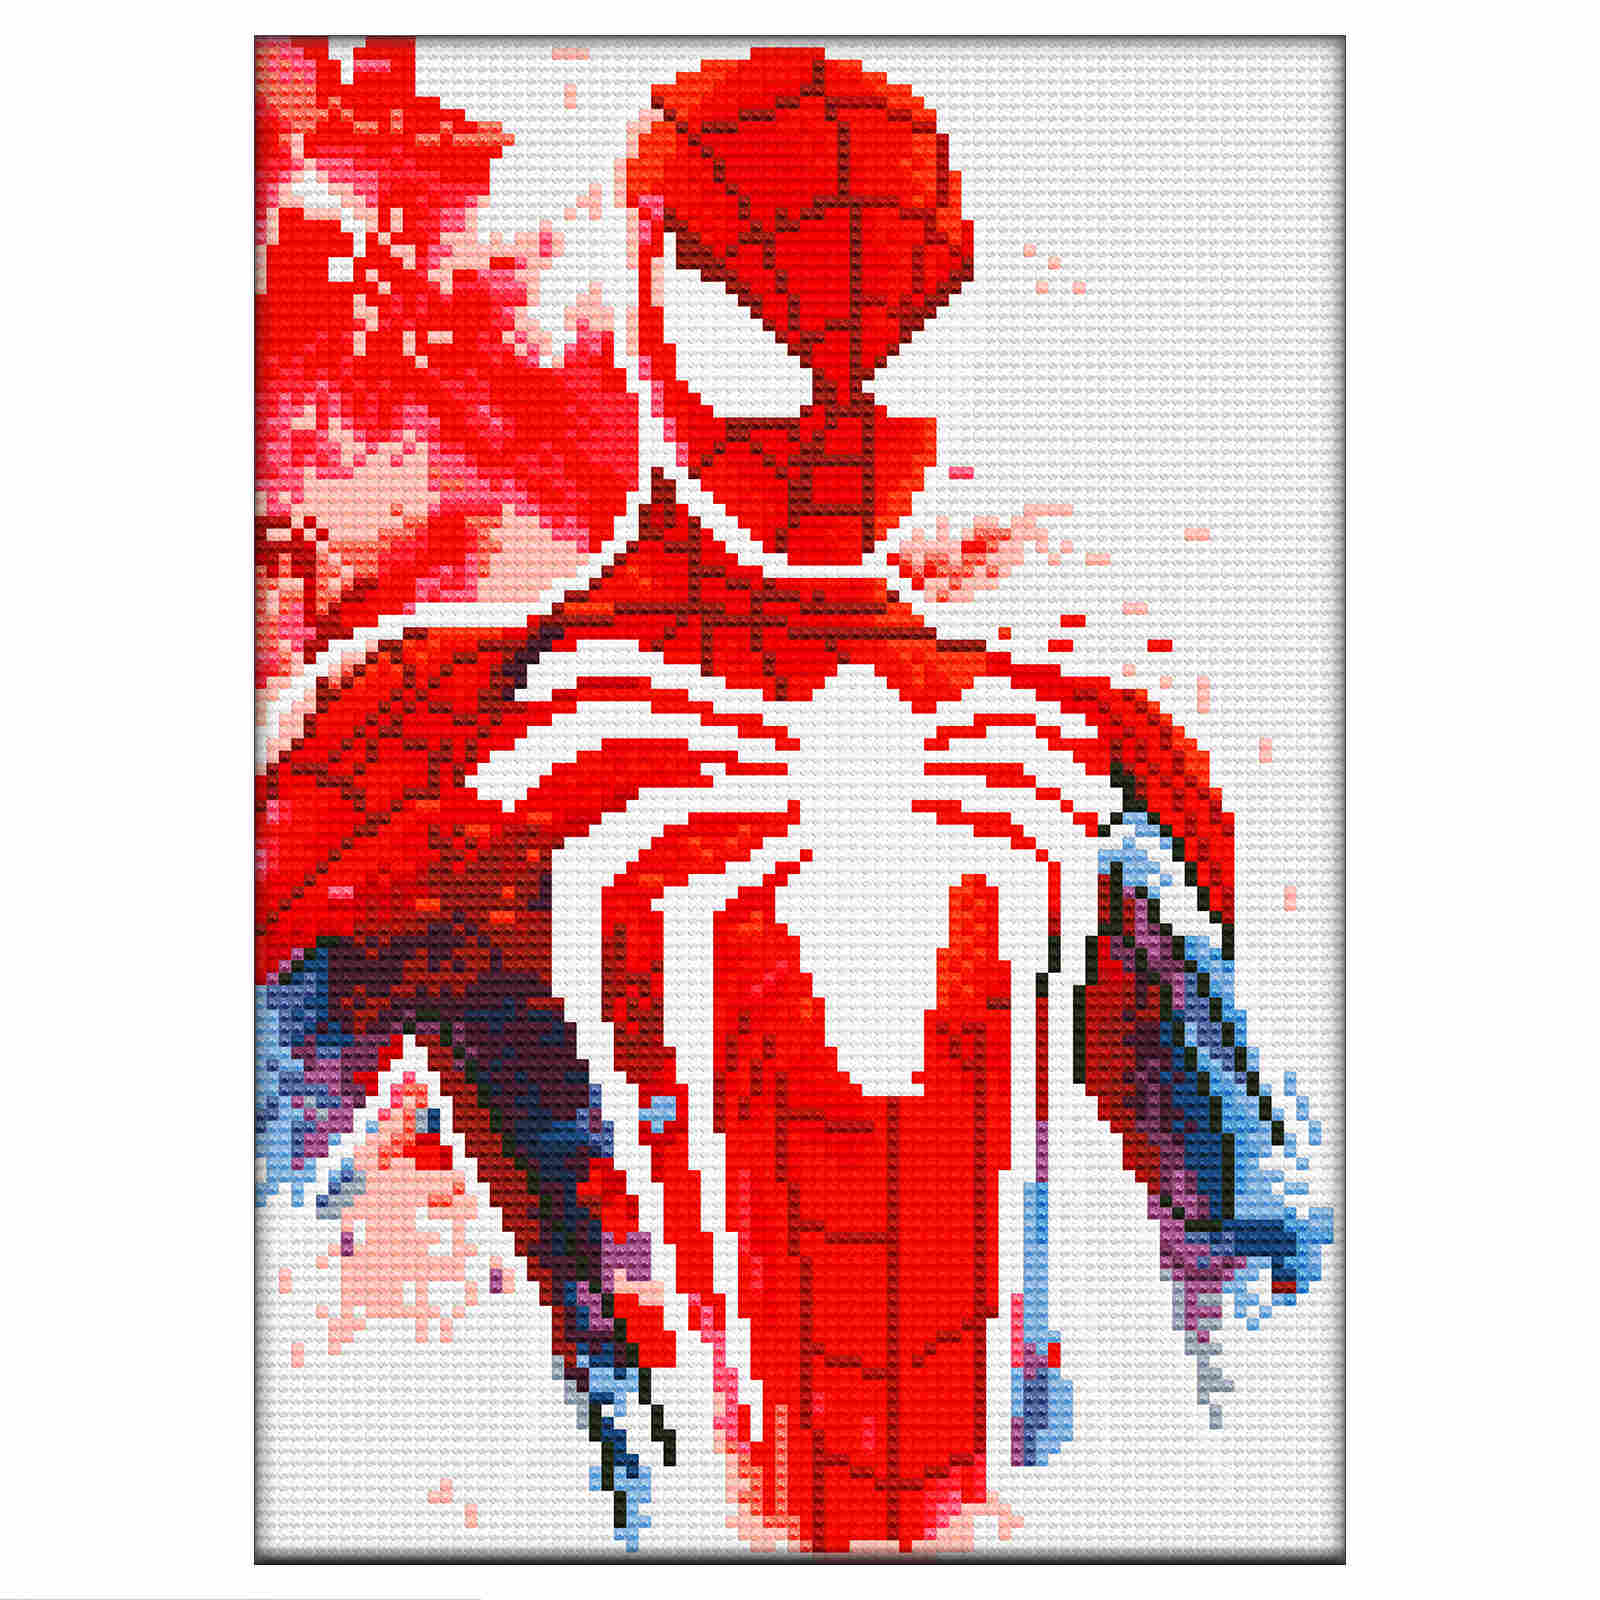 Spiderman Luminous Diamond Painting Kit – Diamond Painting Creations